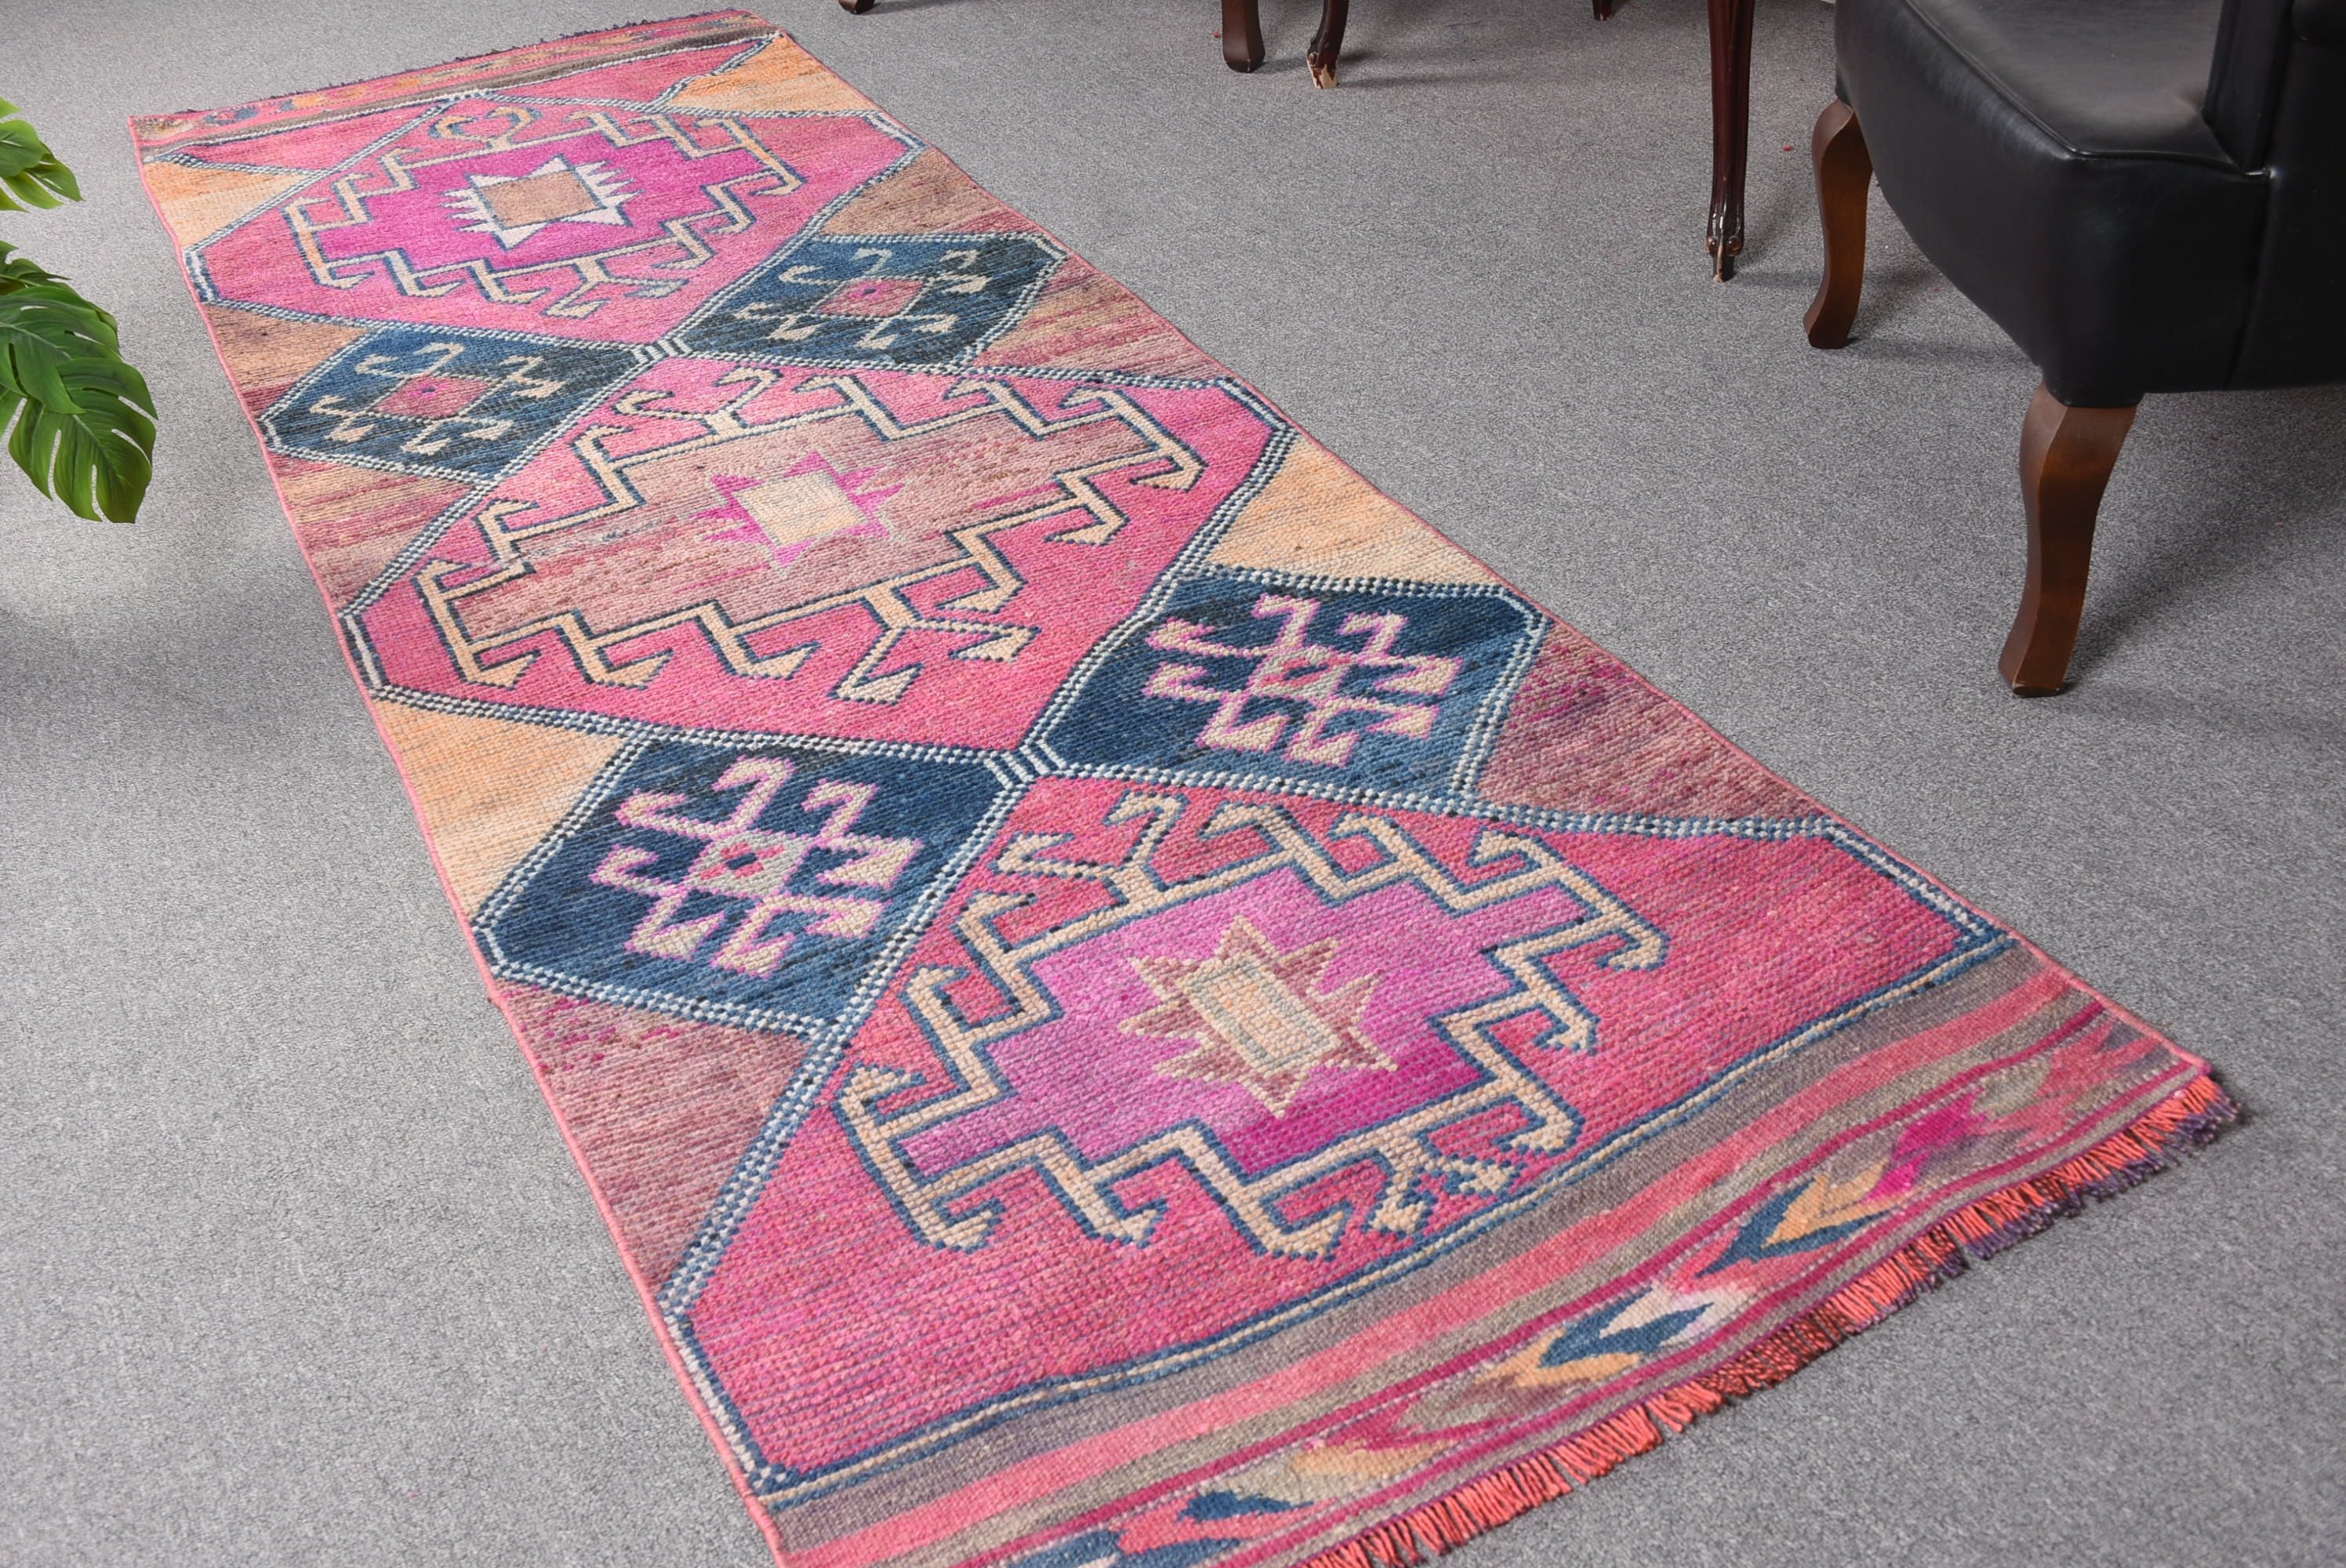 Anatolian Rugs, Pink Floor Rugs, Kitchen Rug, Vintage Rugs, 3x9.7 ft Runner Rug, Rugs for Kitchen, Corridor Rug, Wedding Rugs, Turkish Rugs